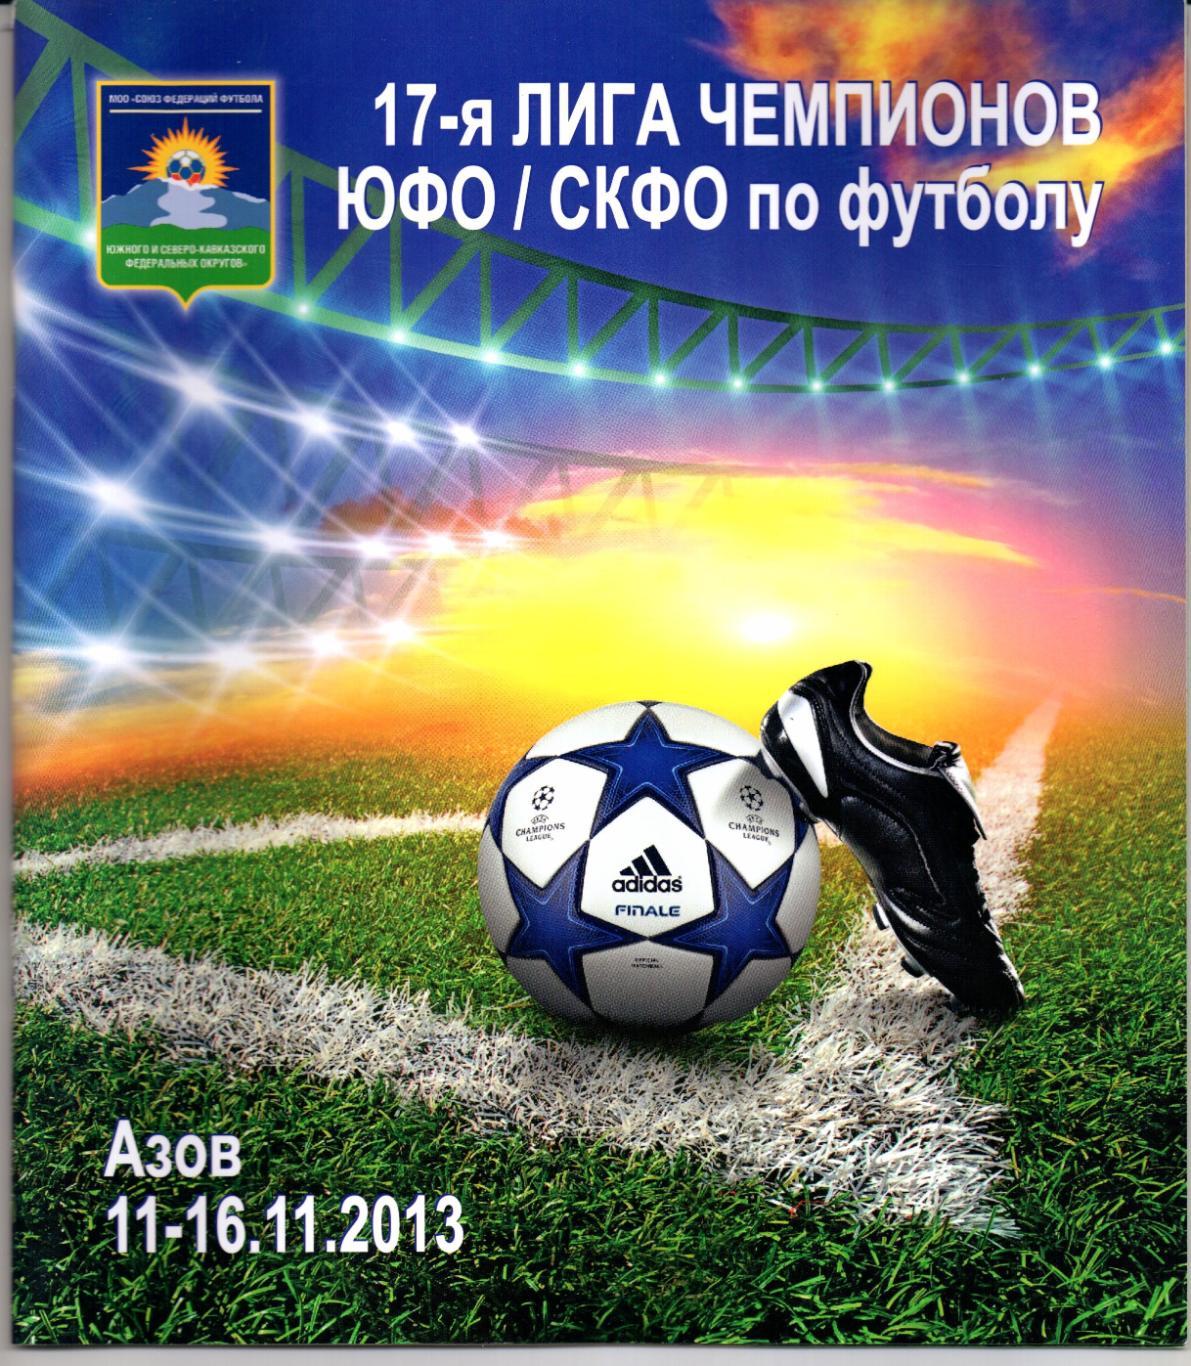 Турнир 17-я Лига чемпионов ЮФО/СКФО 11-16.11.2013 Азов